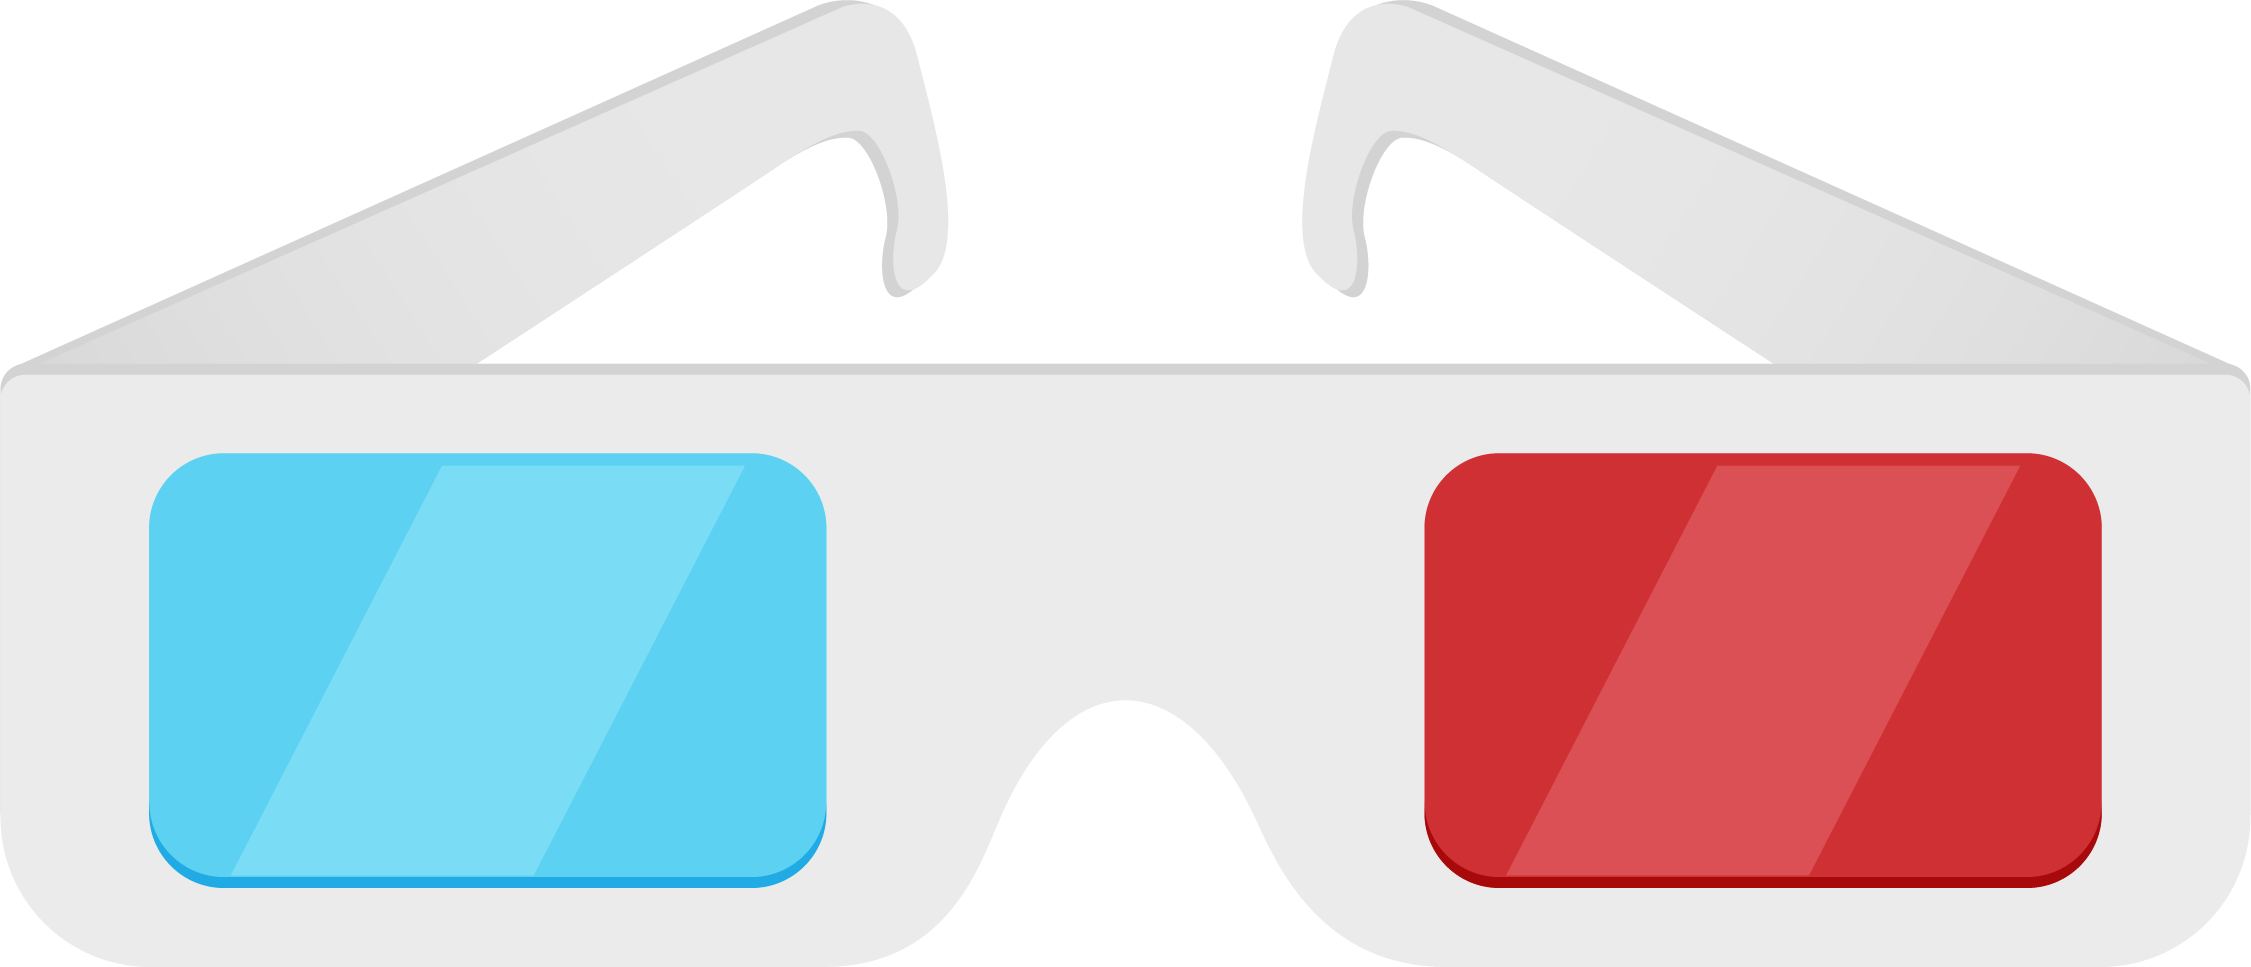 paper-3d-glasses-free-vector